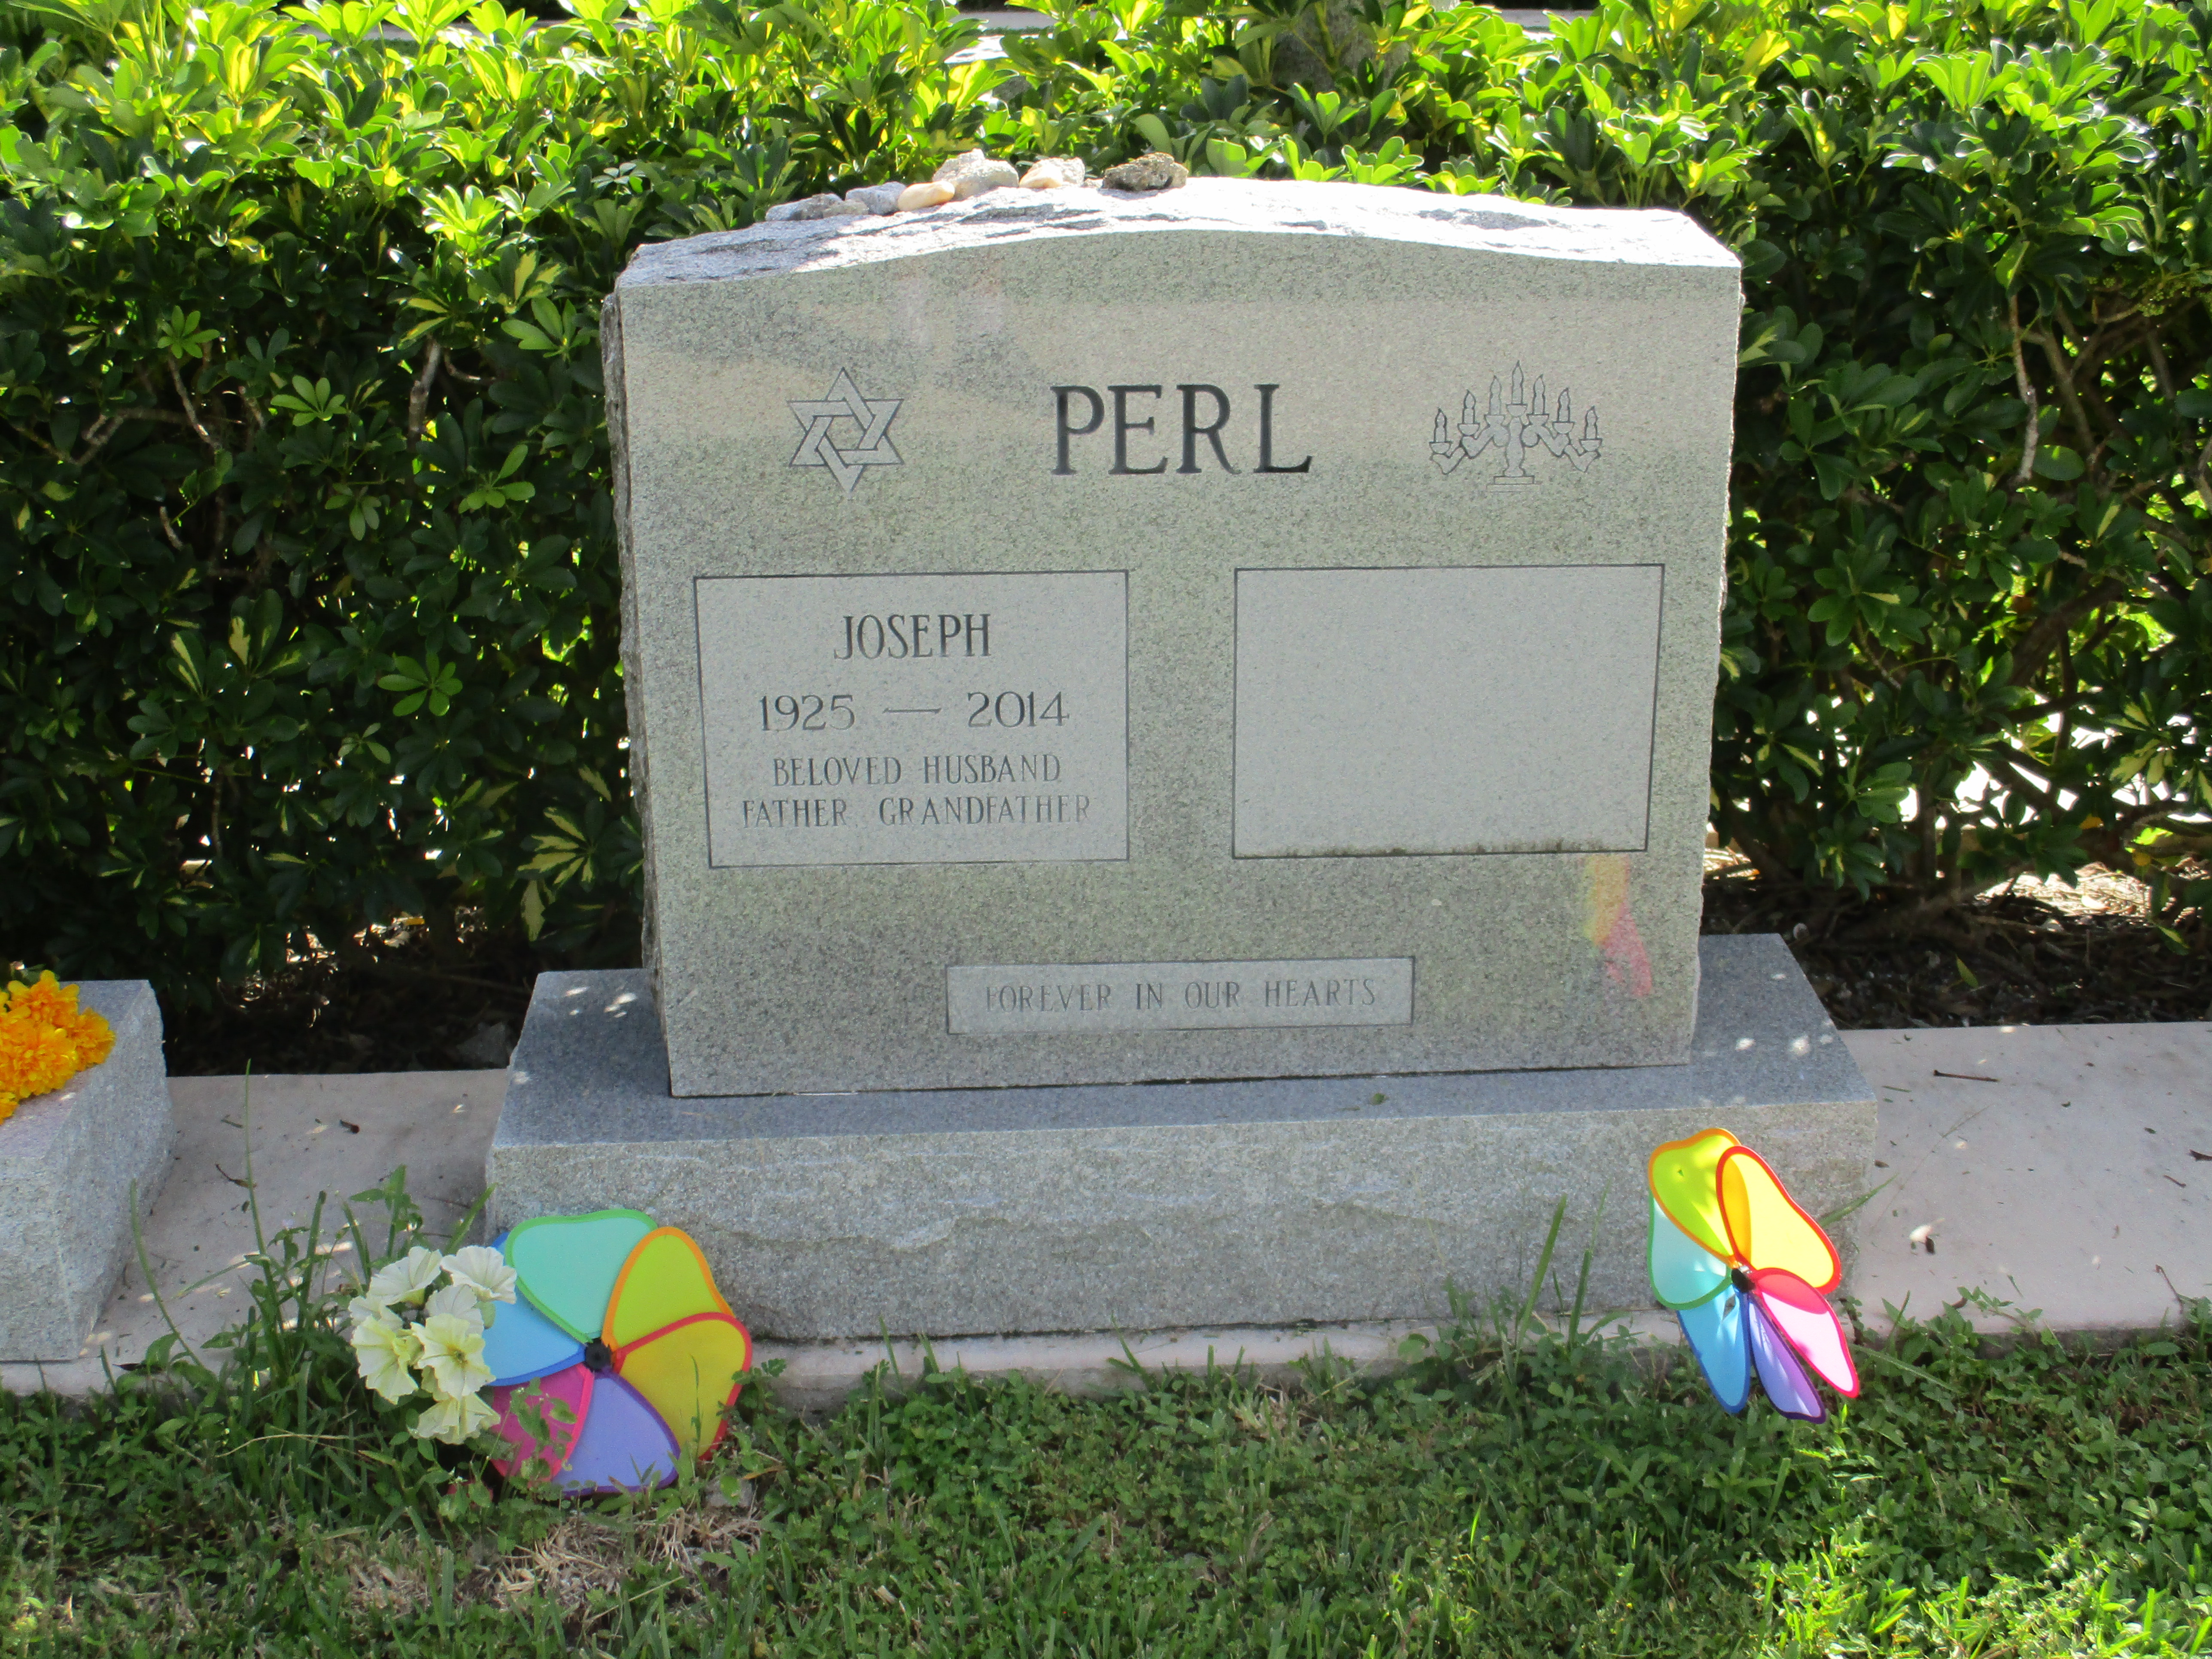 Joseph Perl